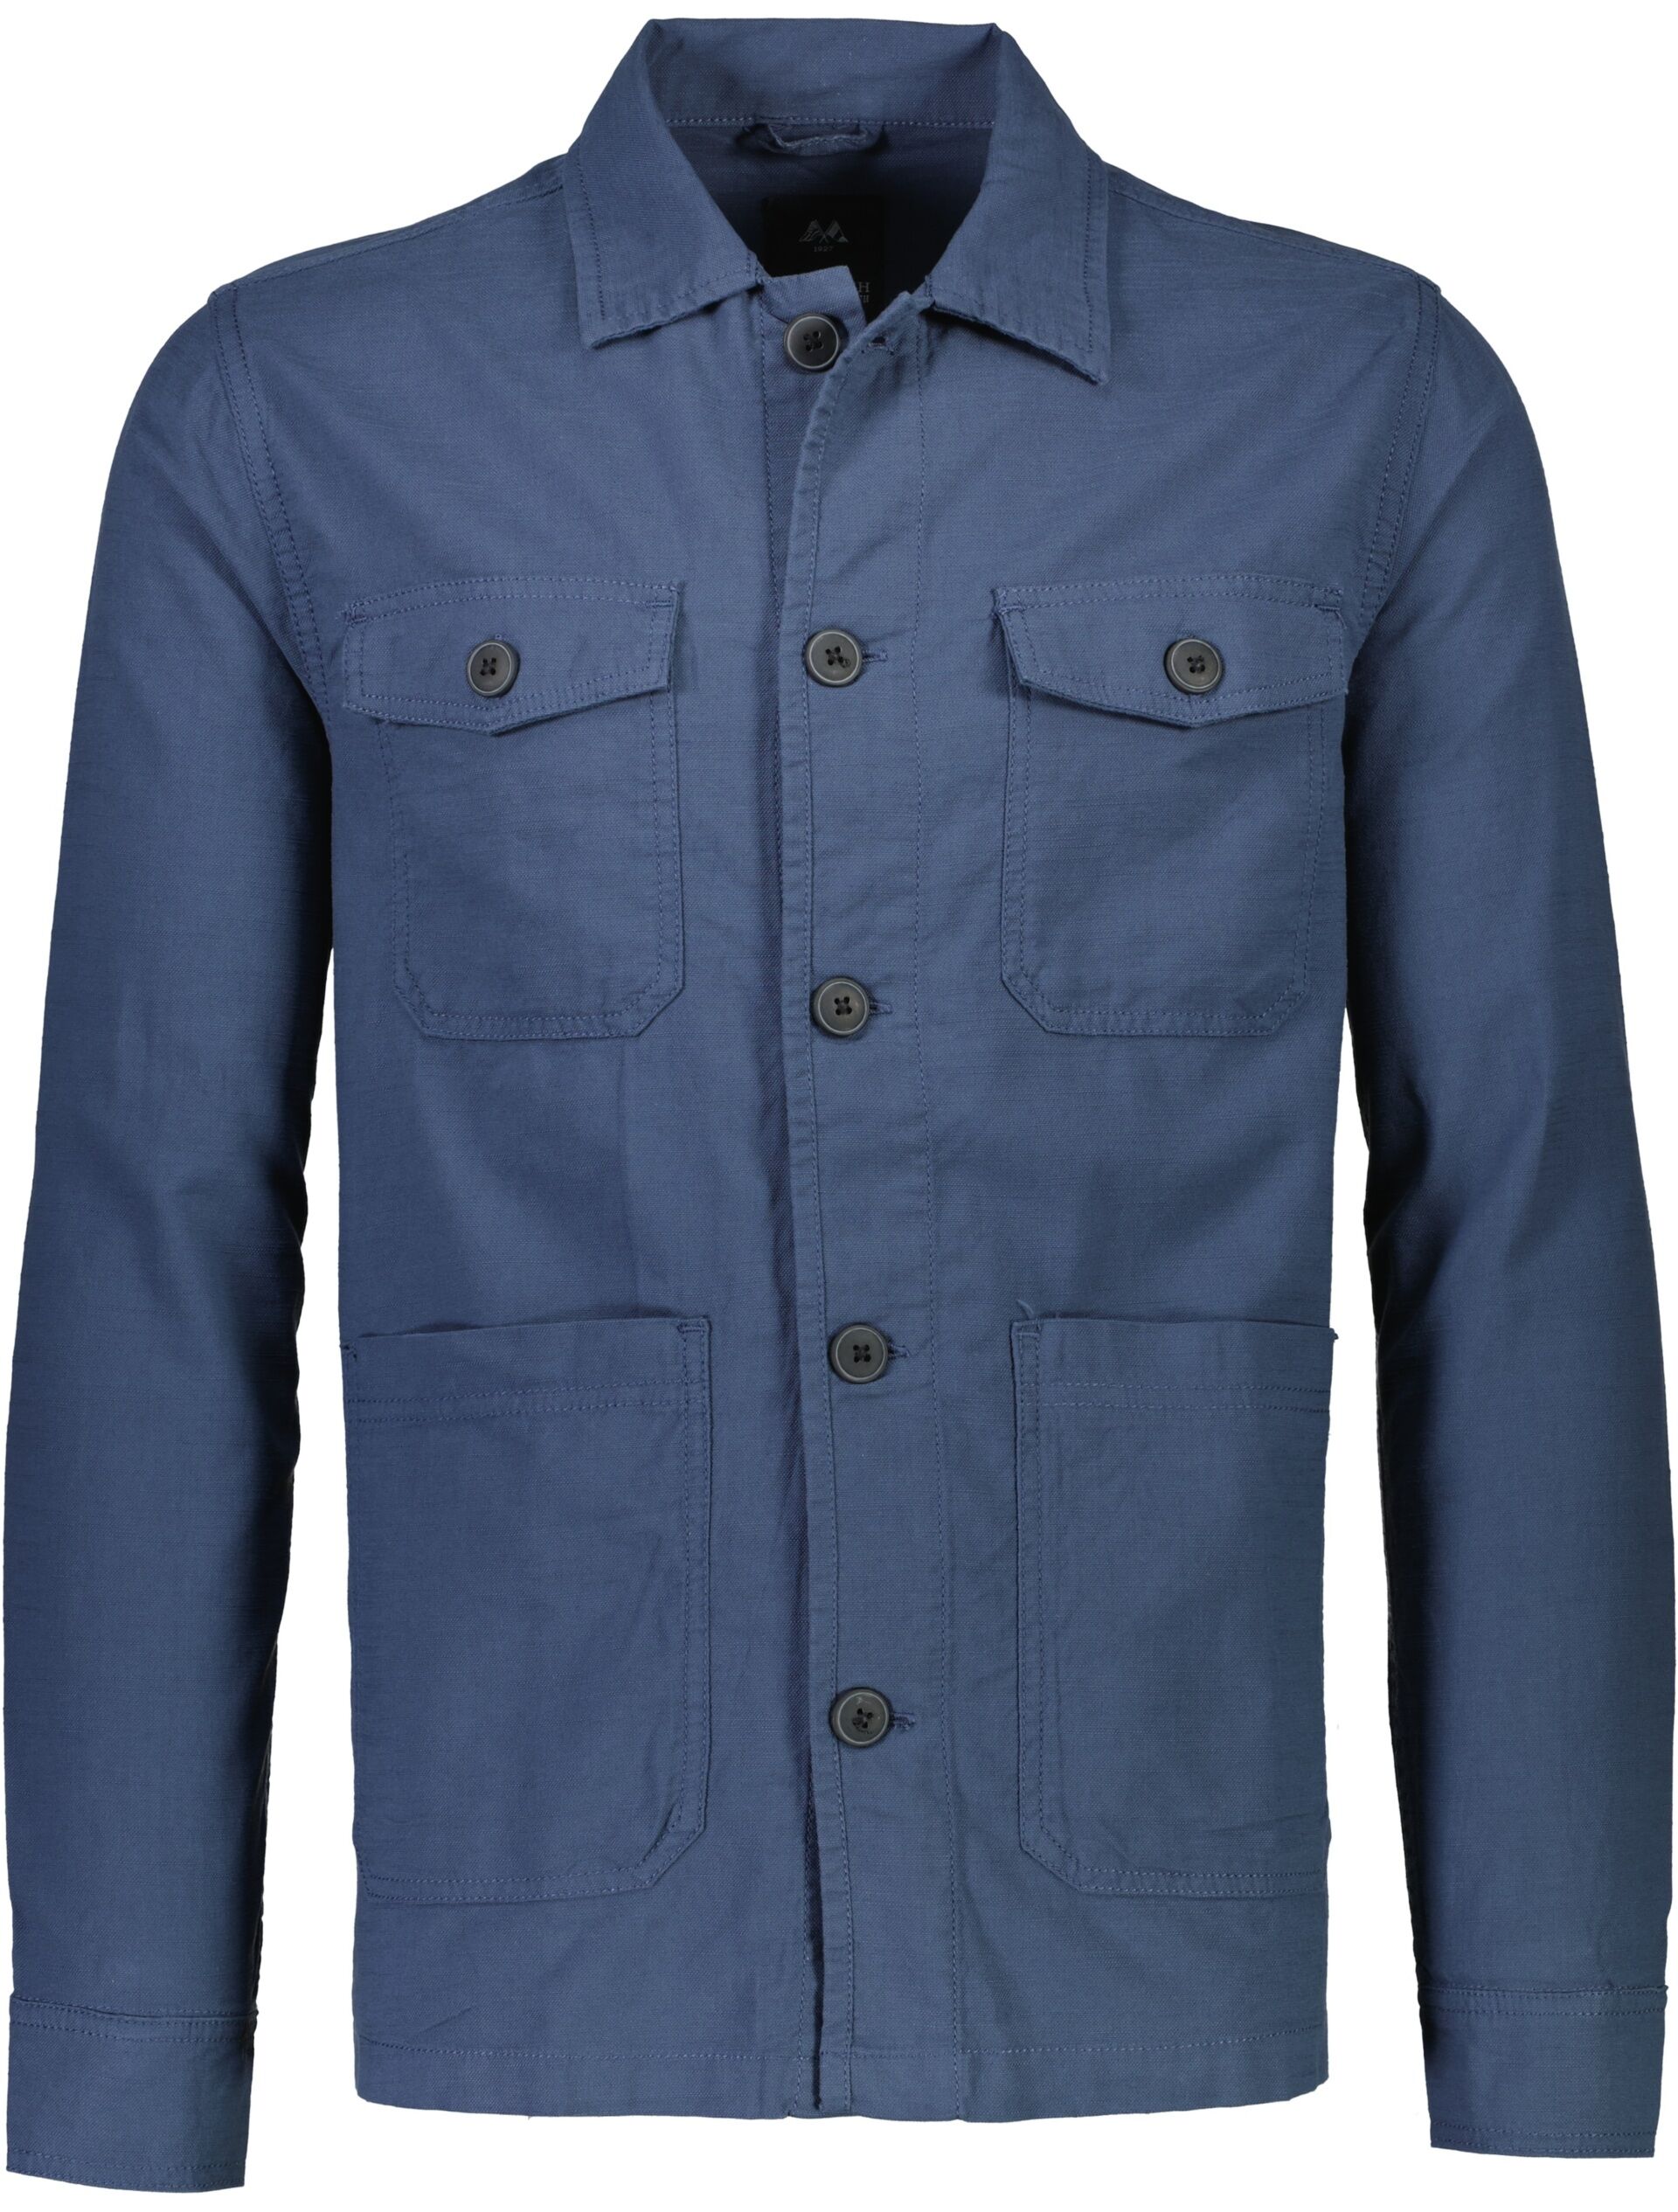 Overshirt Overshirt Blue 30-325010